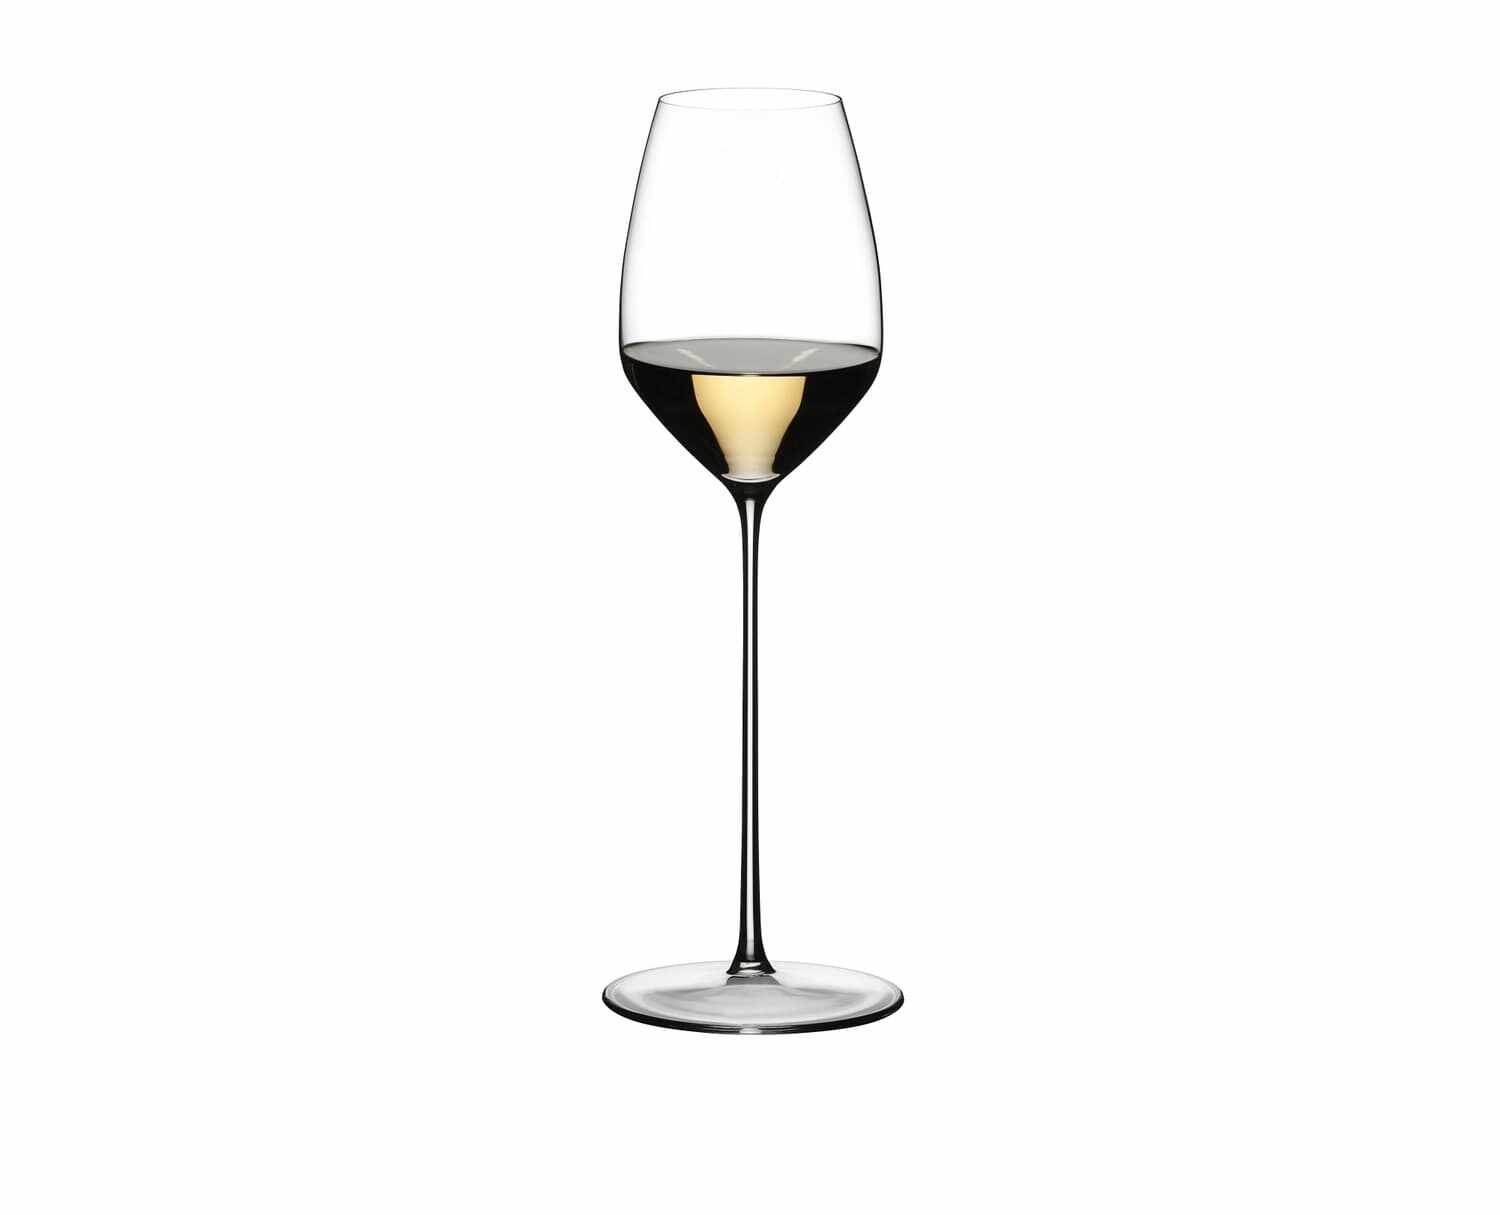 Pahar pentru vin, din cristal Max Riesling Clear, 490 ml, Riedel